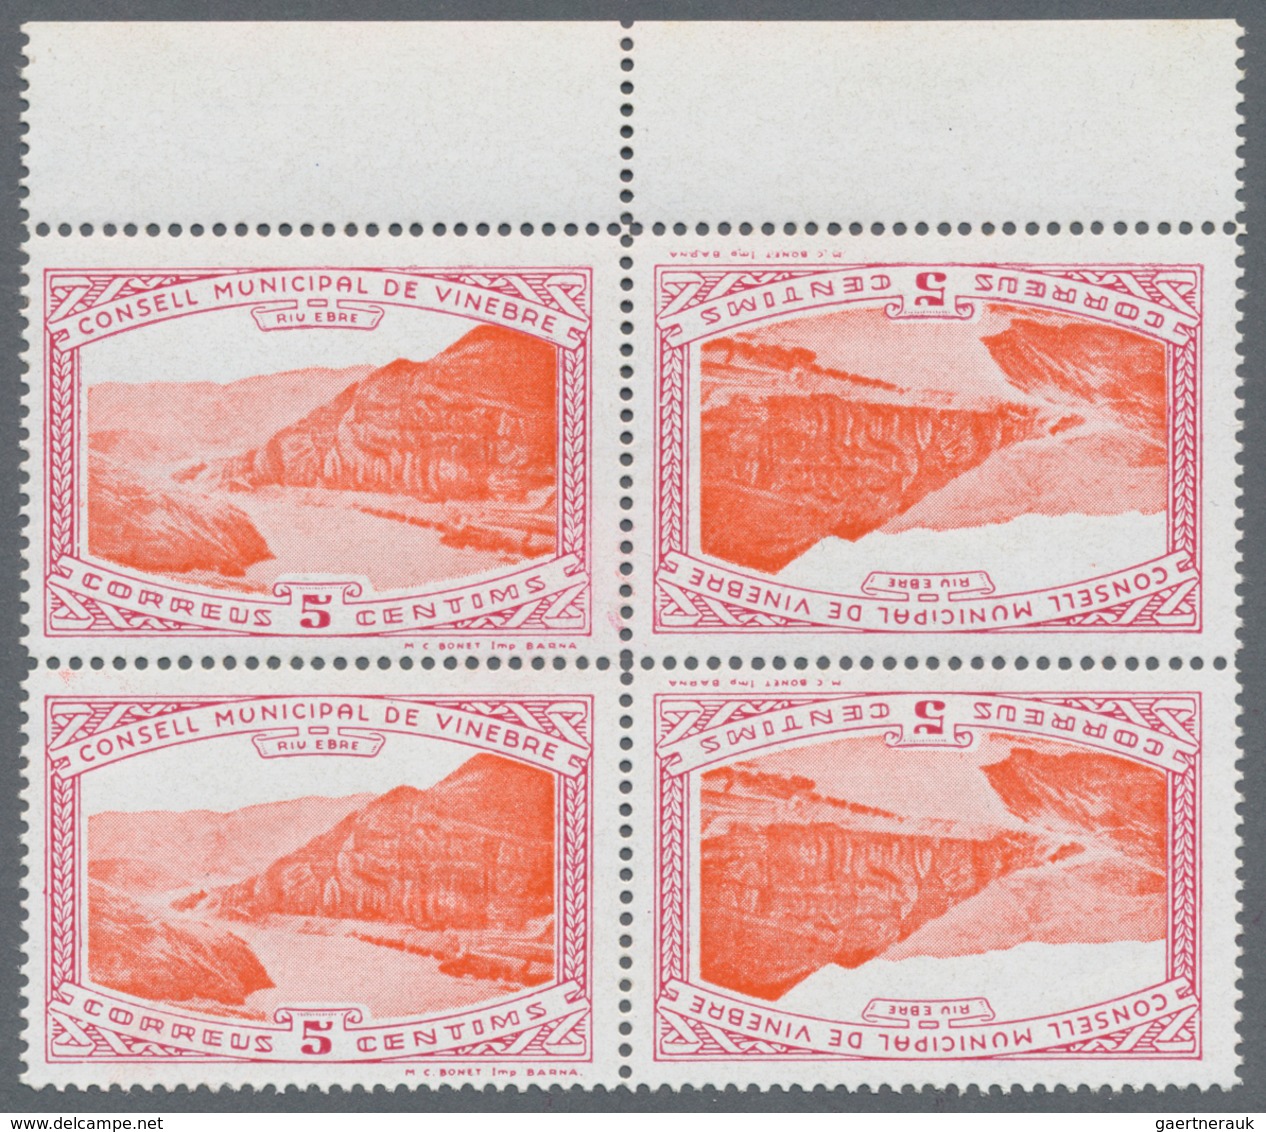 Spanien - Lokalausgaben: 1937, VINEBRE: Accumulation Of Local 5 Cents Stamps 'CONSELL MUNICIPAL DE V - Emisiones Nacionalistas